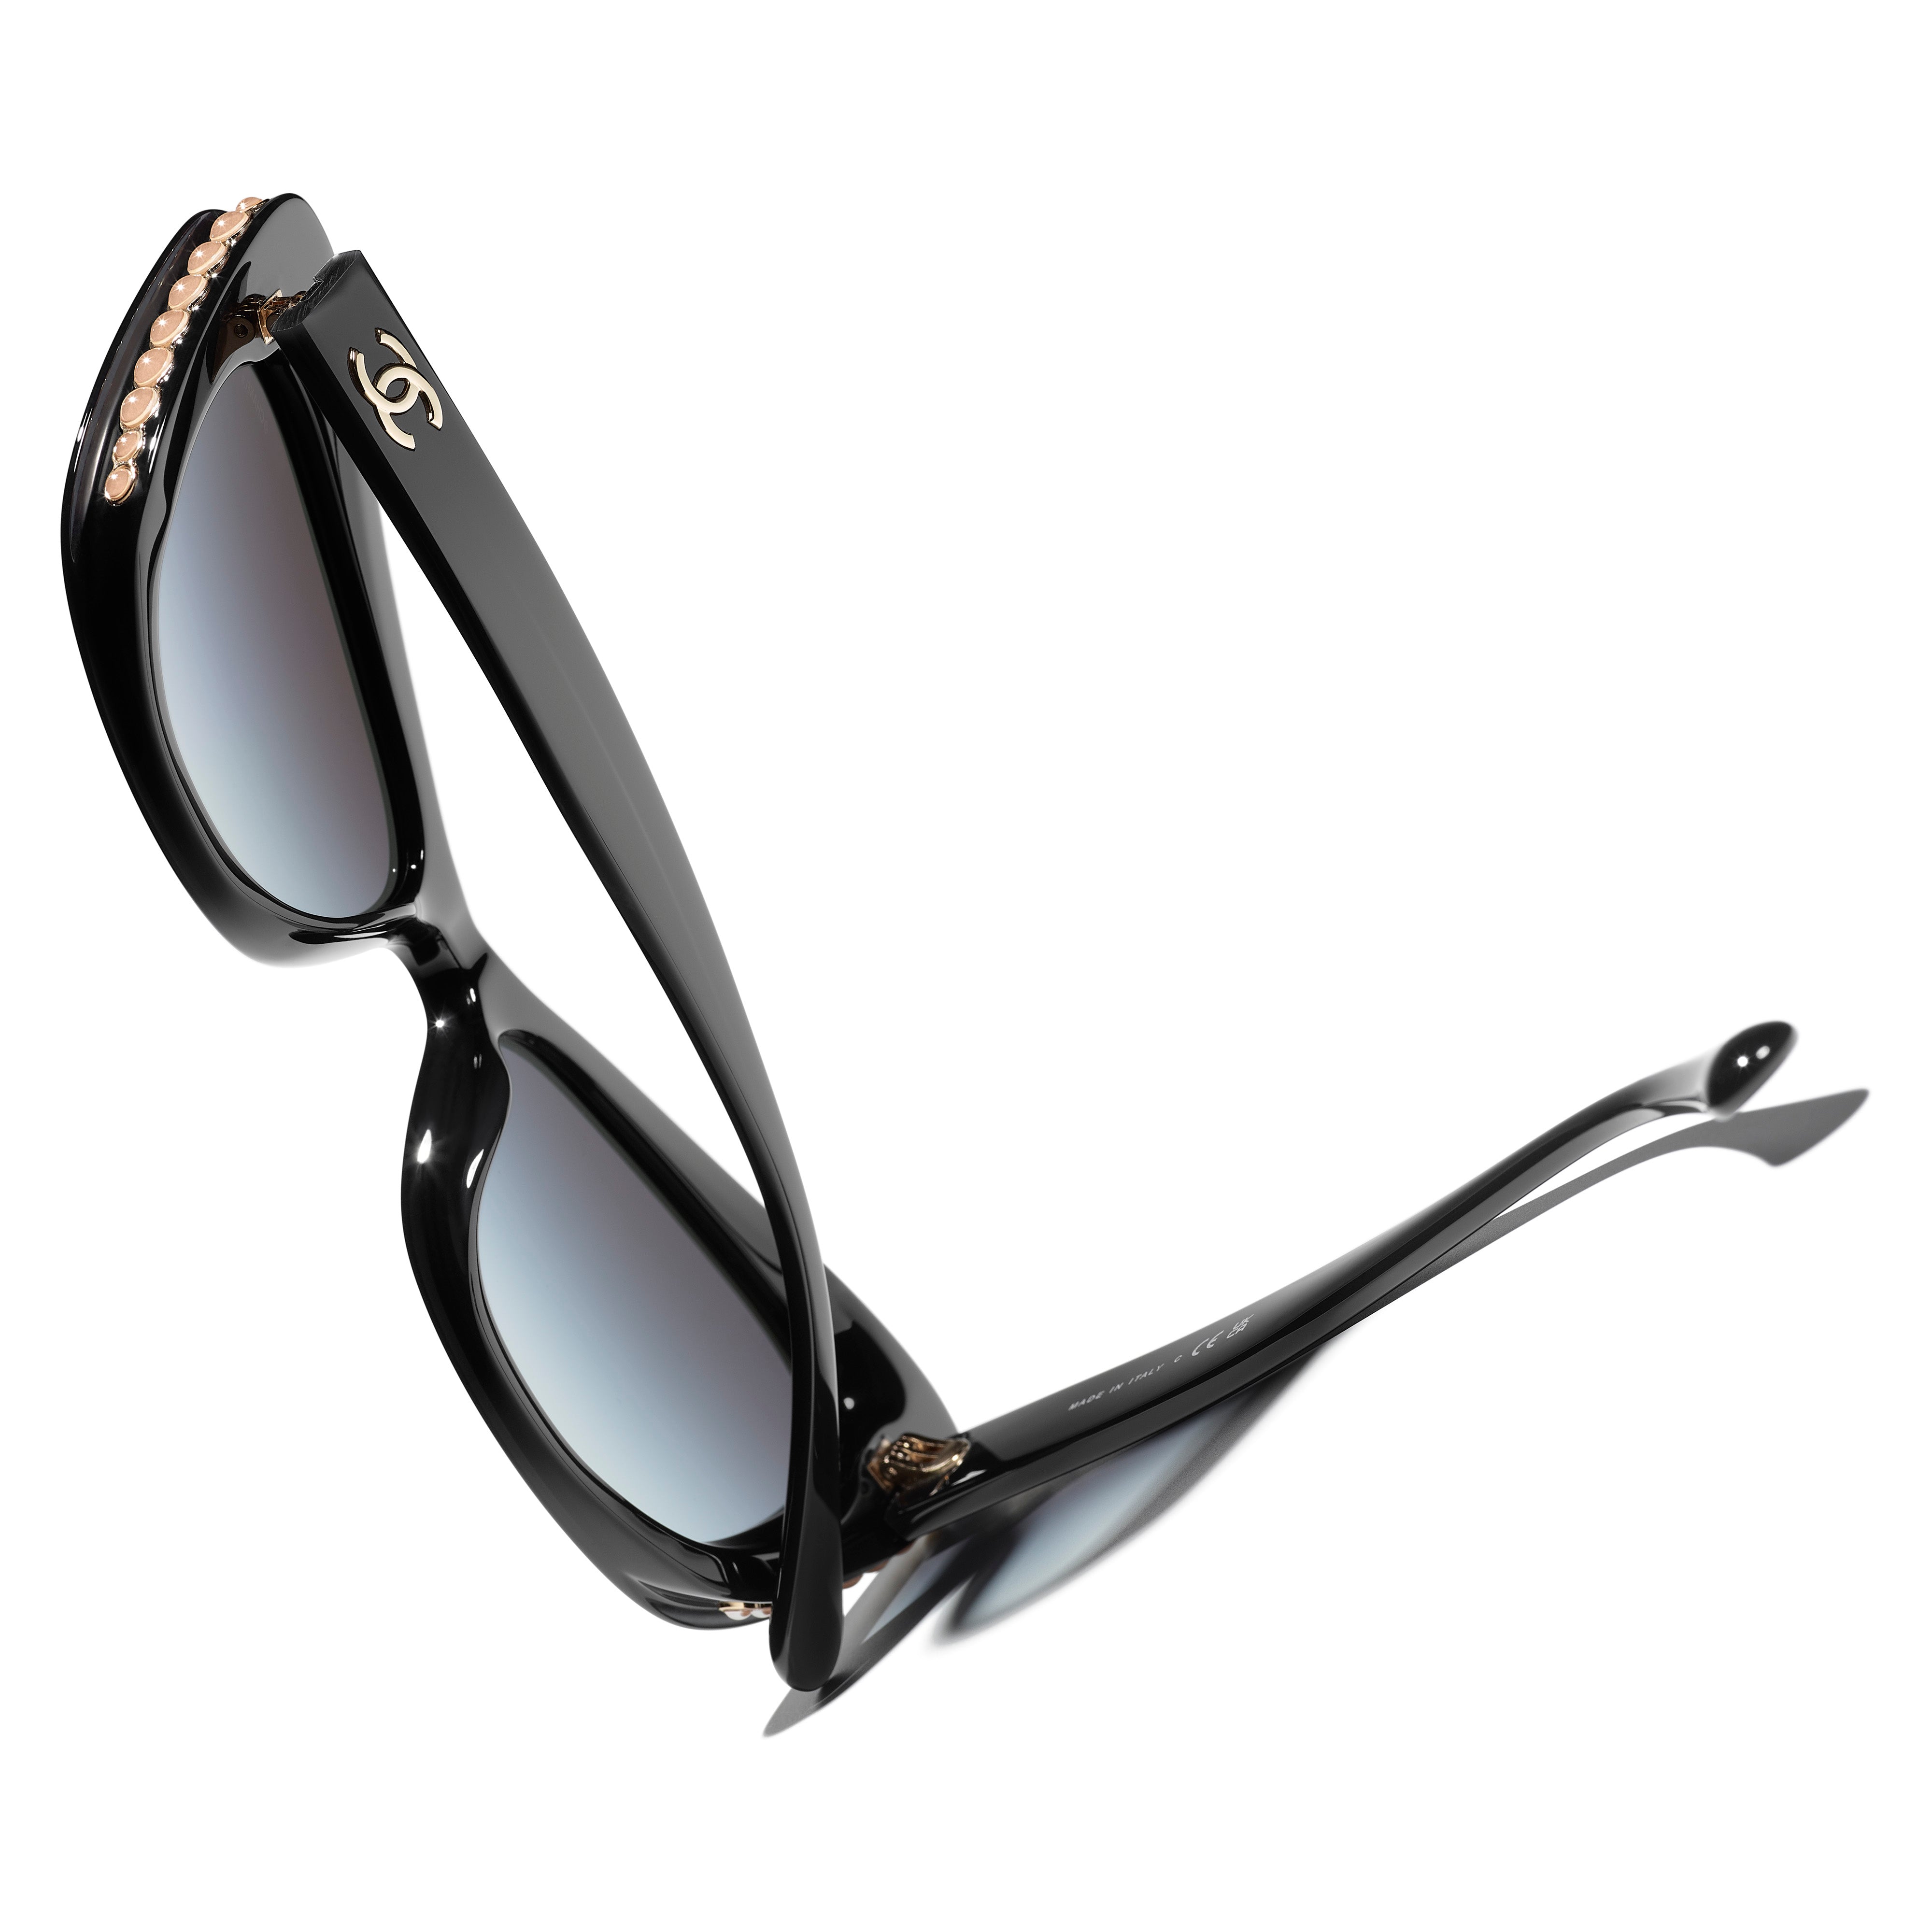 CHANEL 5481H Cat Eye Sunglasses | Fashion Eyewear